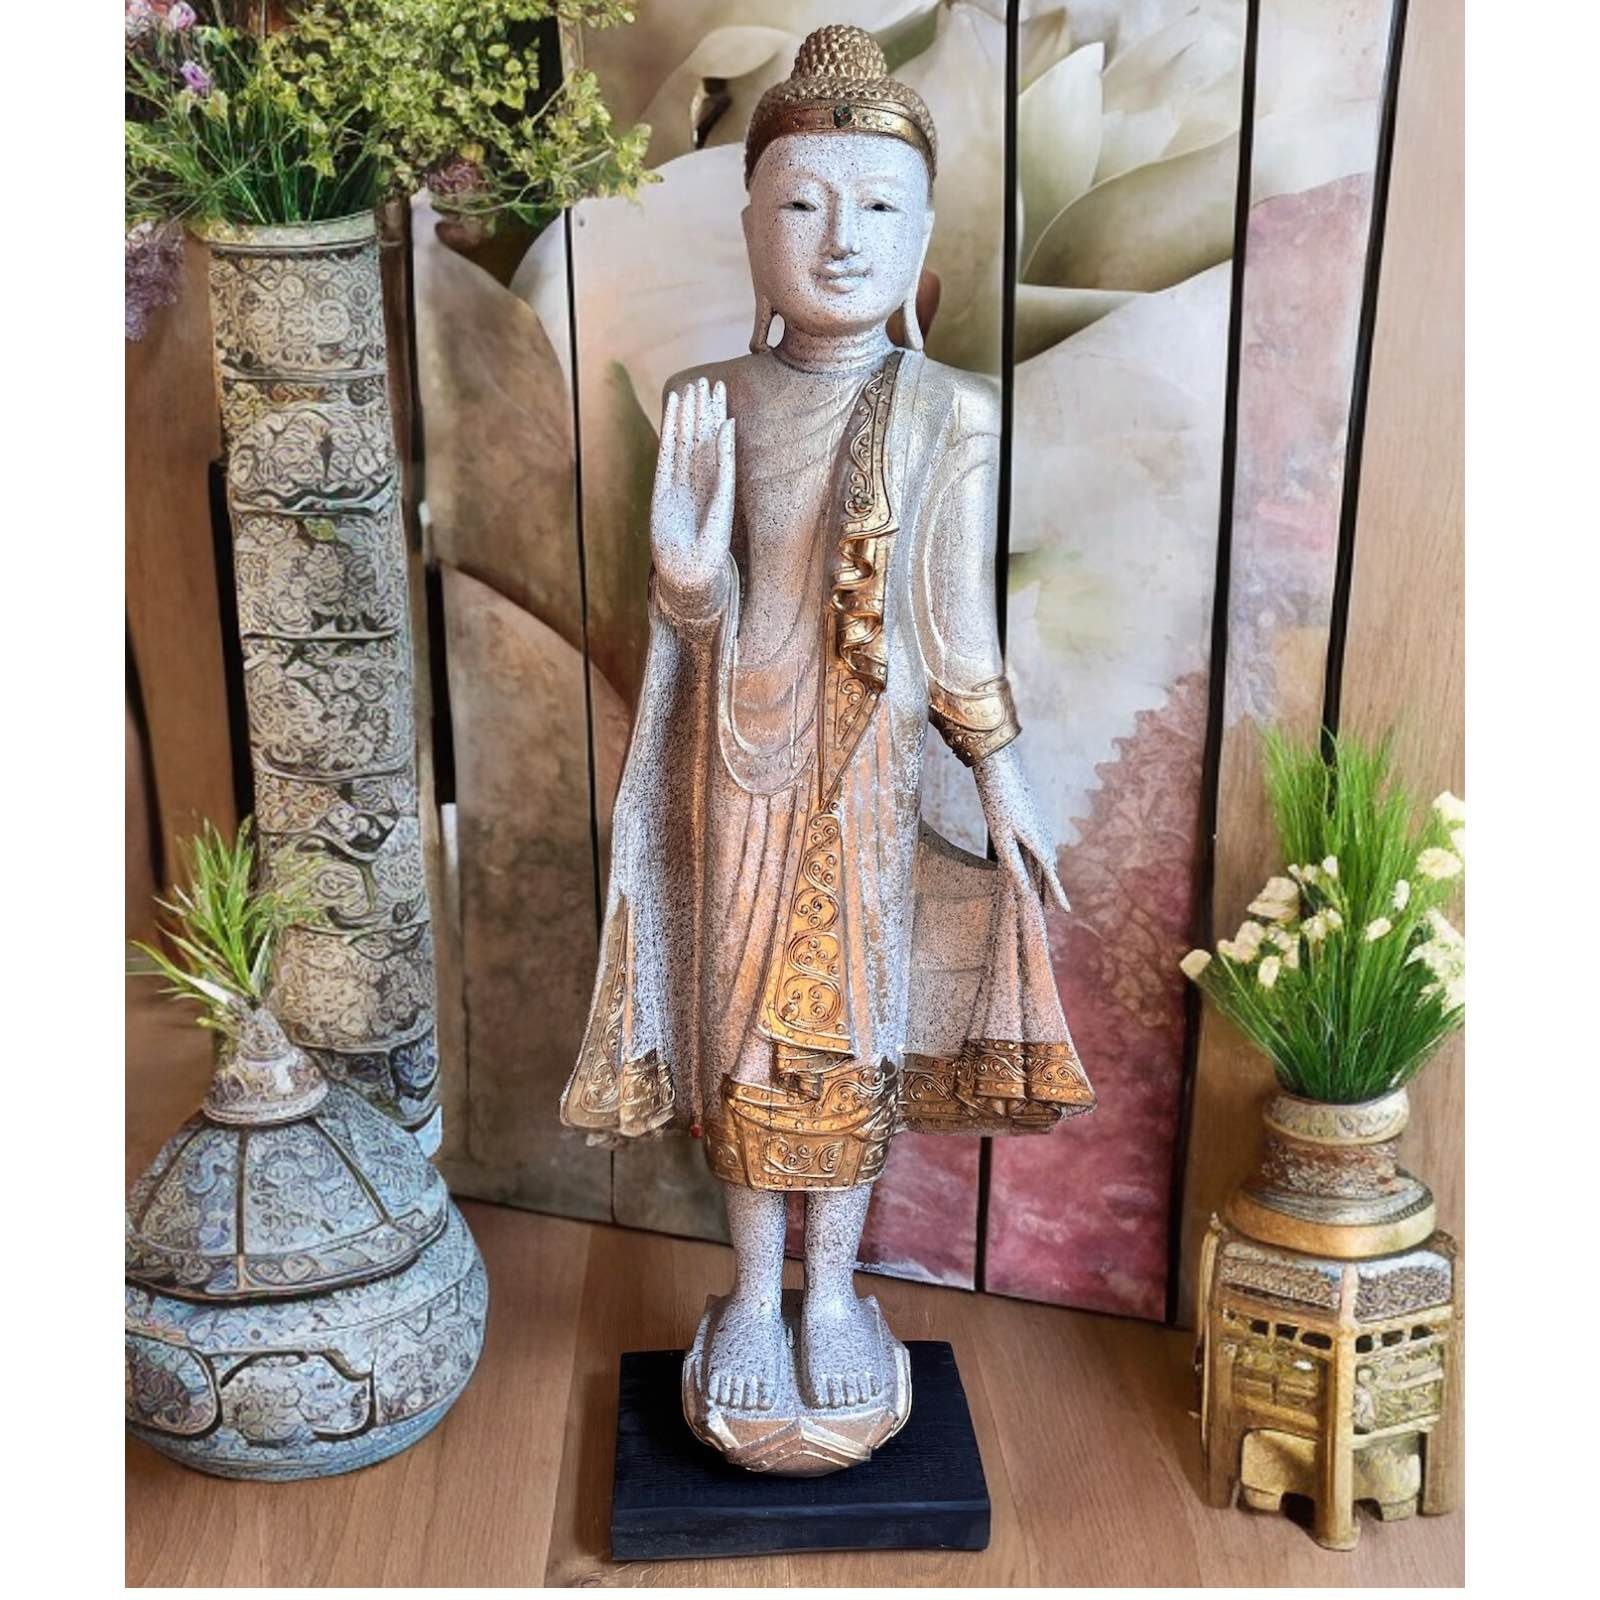 108cm Holz Figur groß Thailand Asien Buddha Buddhafigur Montags LifeStyle